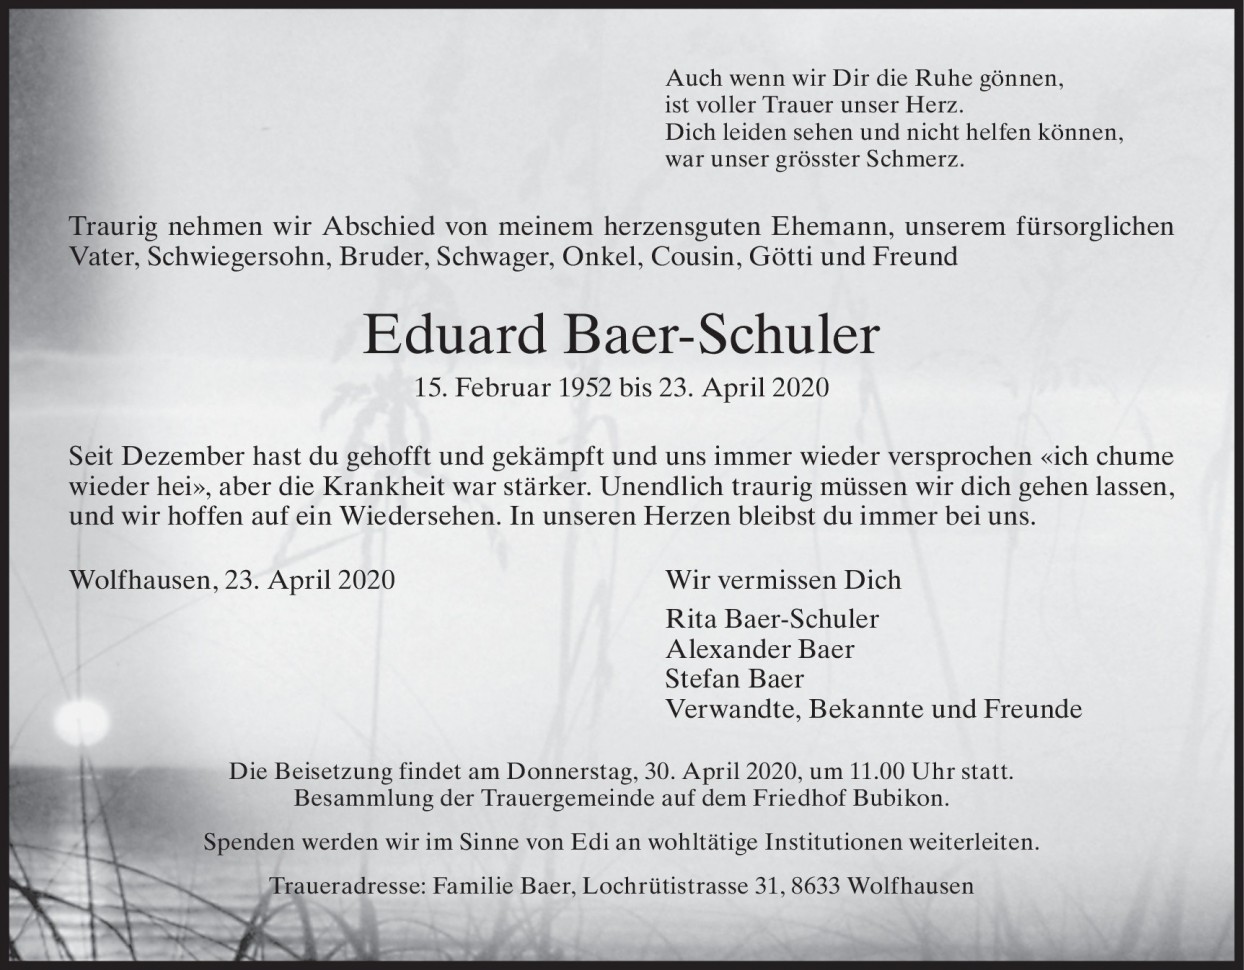 Eduard Baer-Schuler